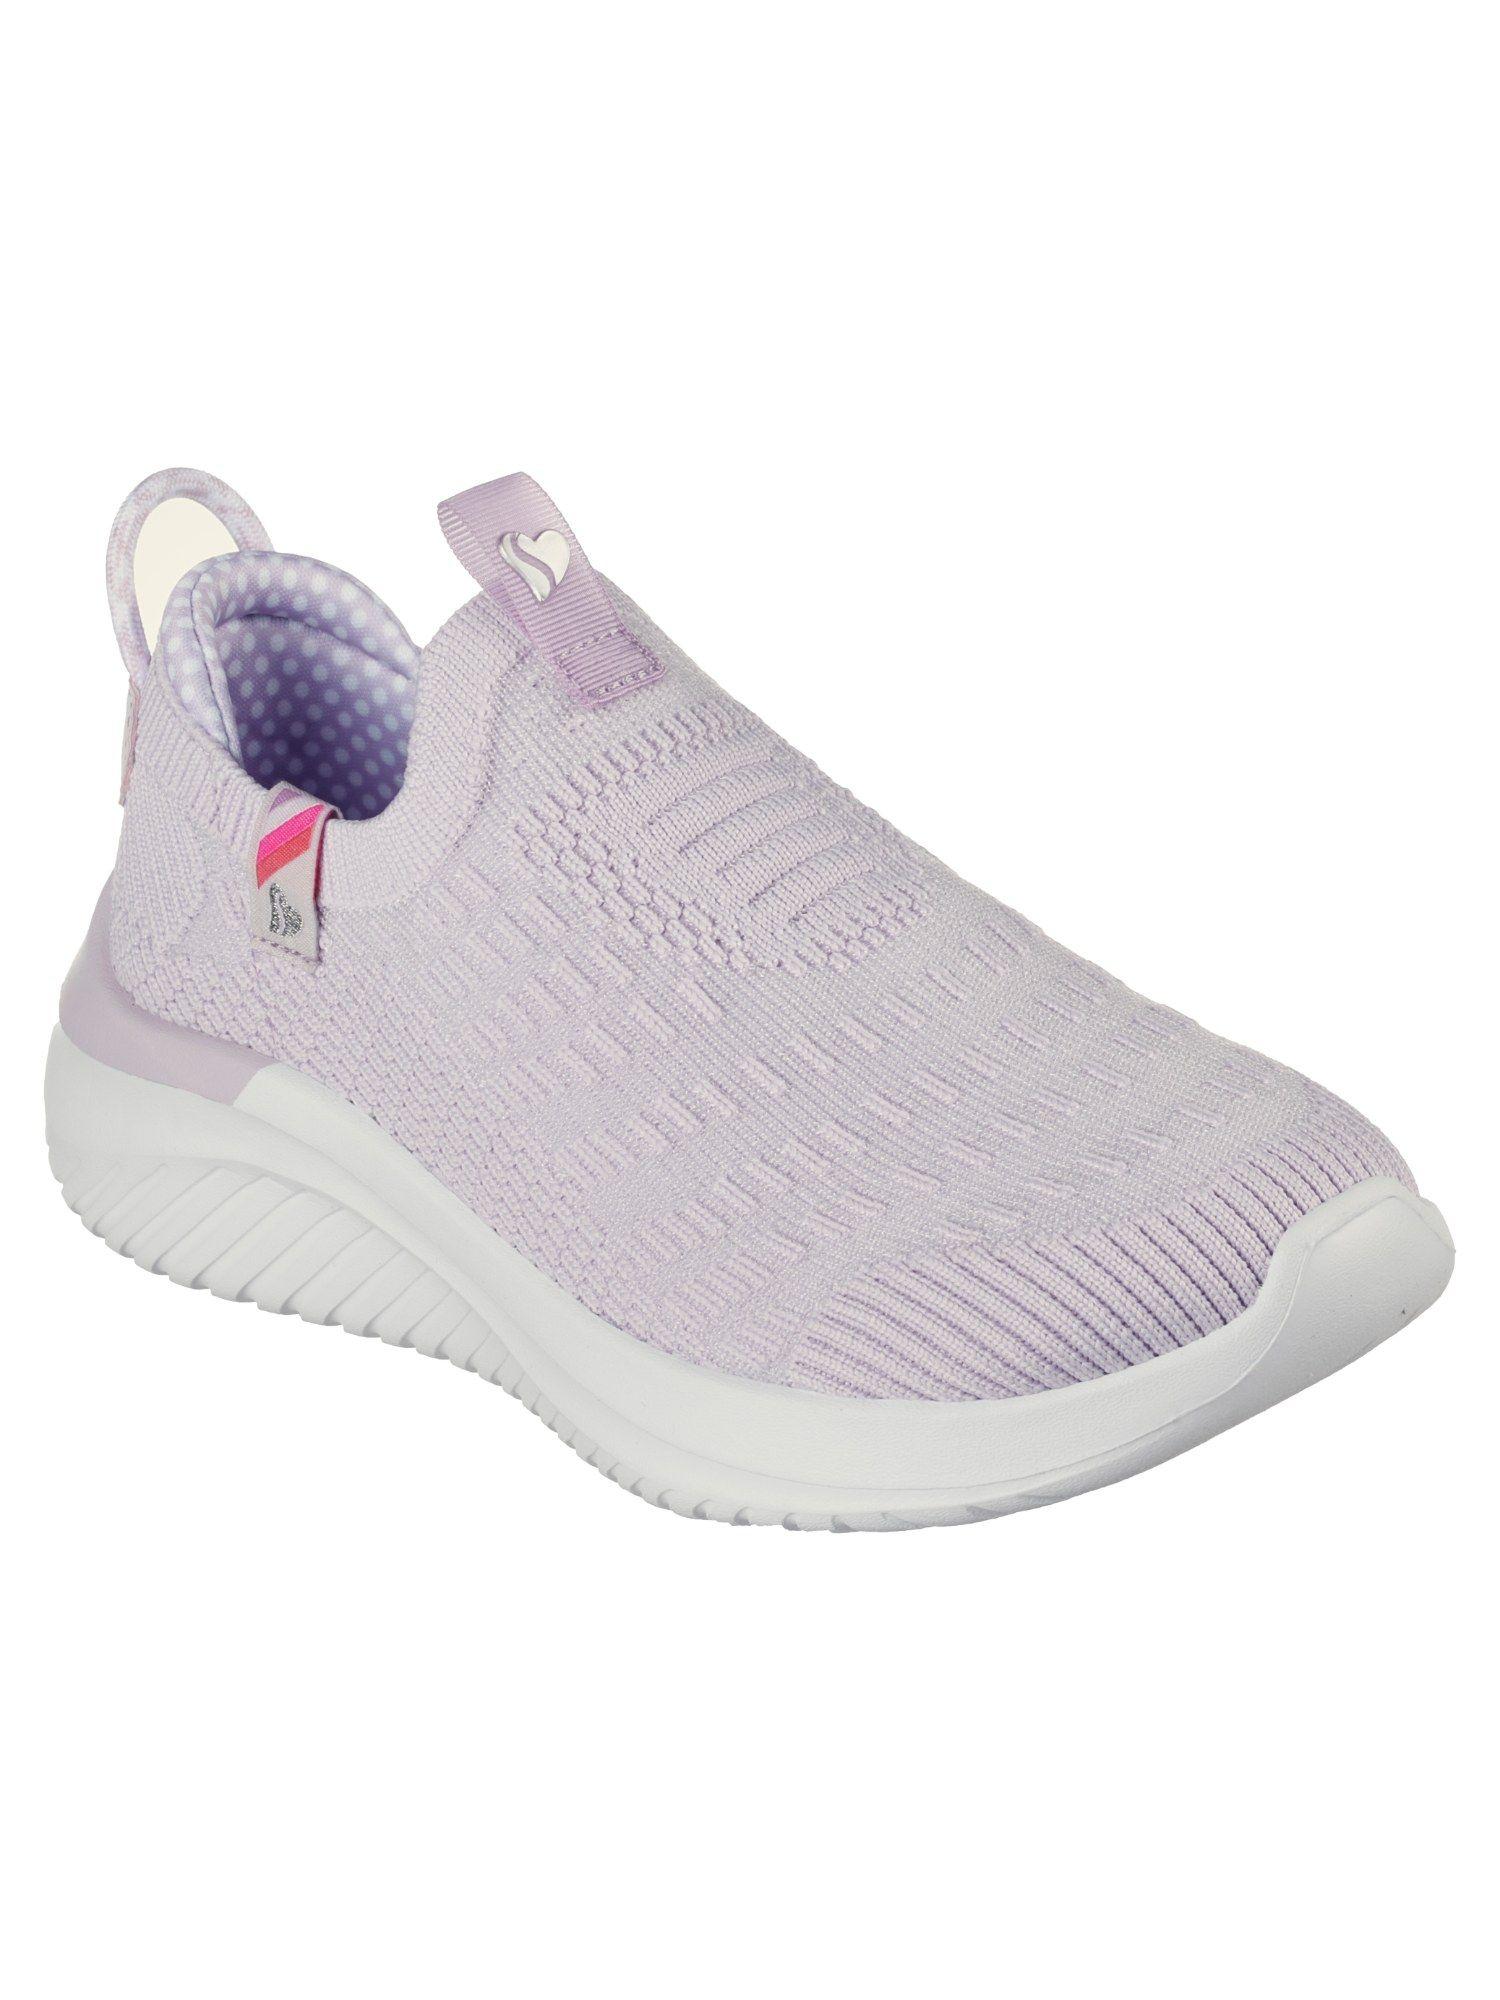 lavender ultra flex 3.0 - happy bright shoes